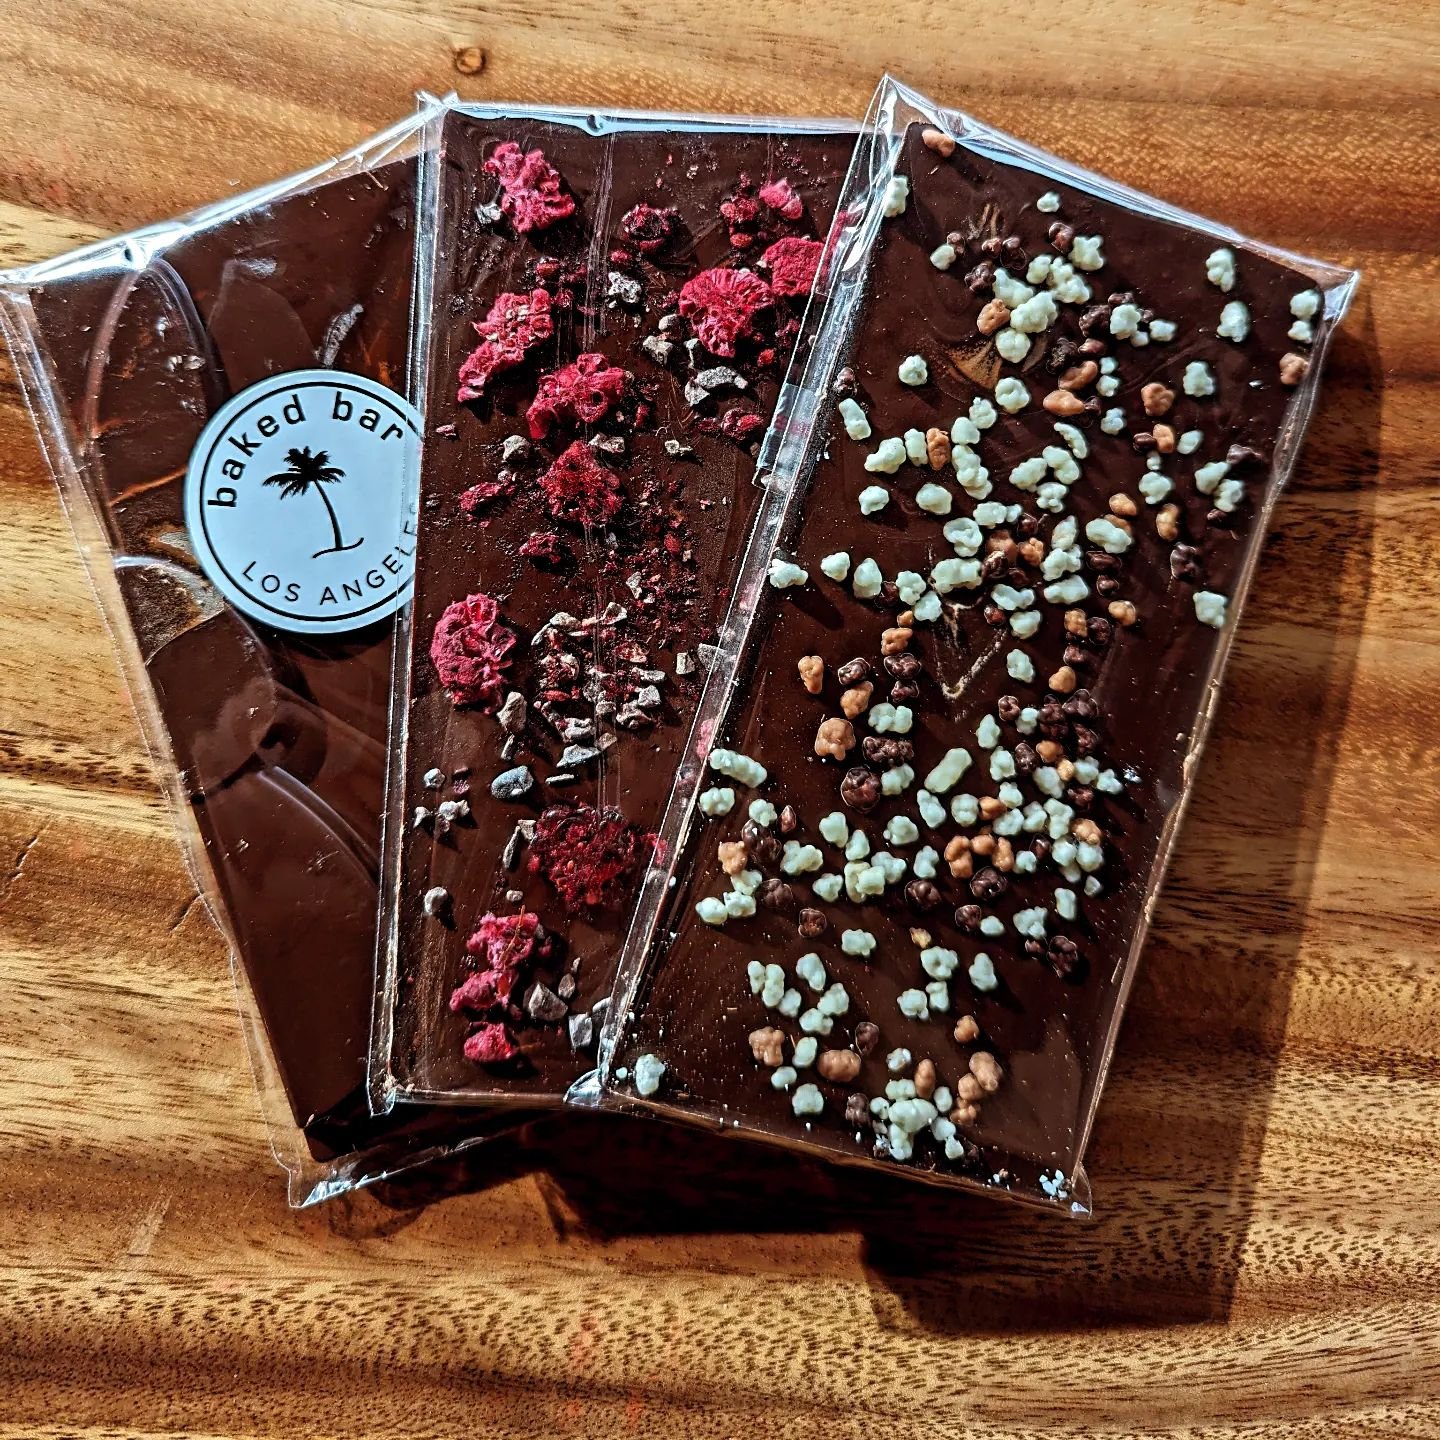 Mini chocolate bars 🍫 🌴 
Dark chocolate
Or mixed berries
Flavors for everyone 
.
.
.
.
.